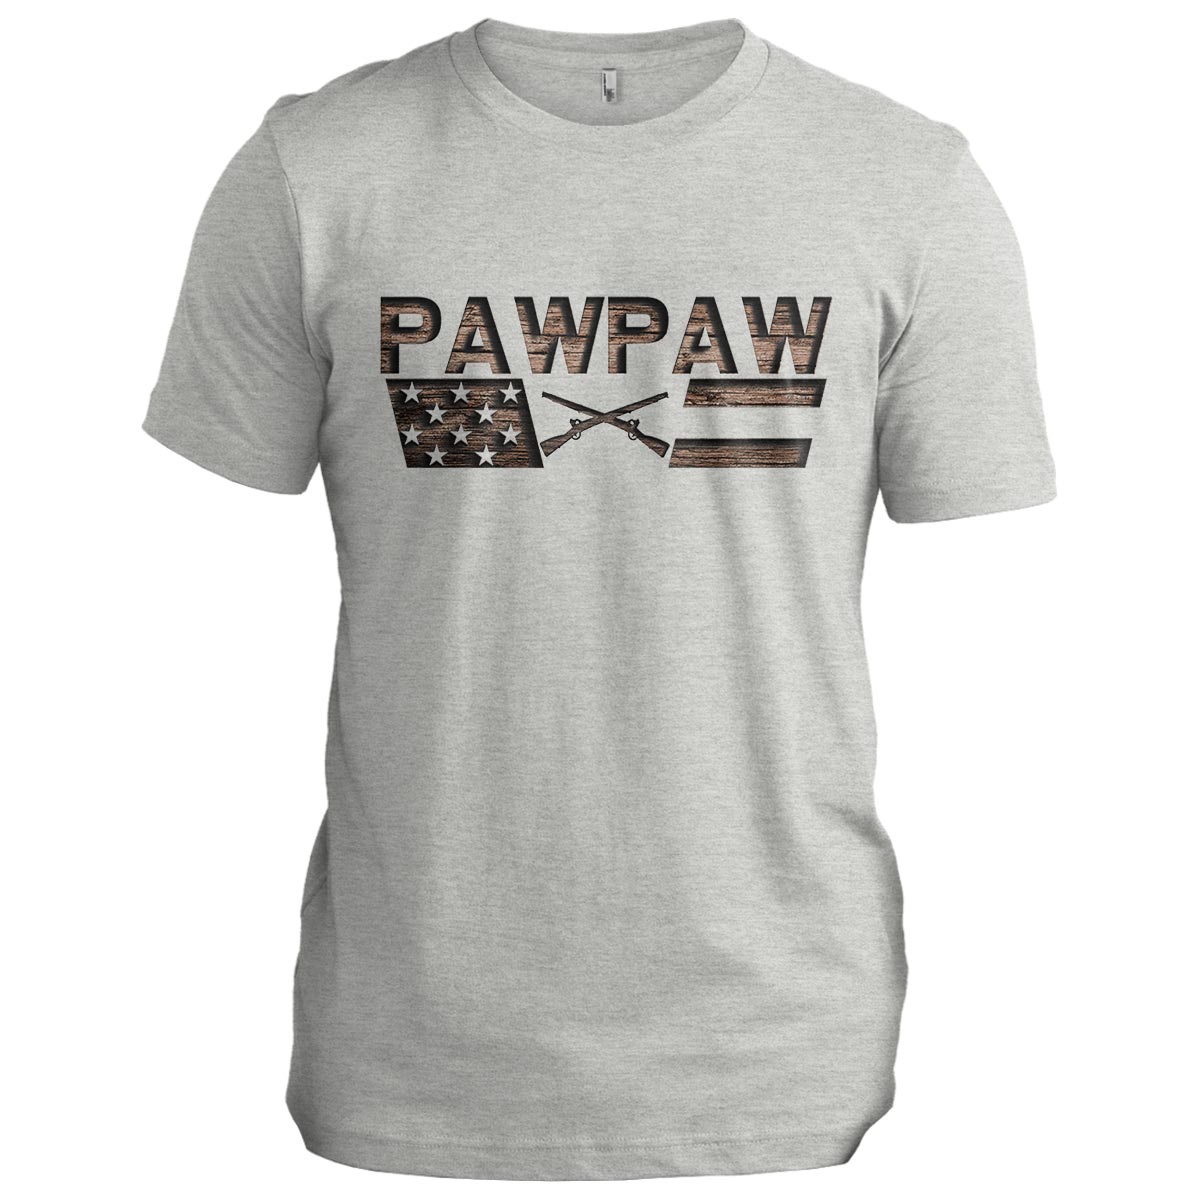 pawpaw: Strong as Oak